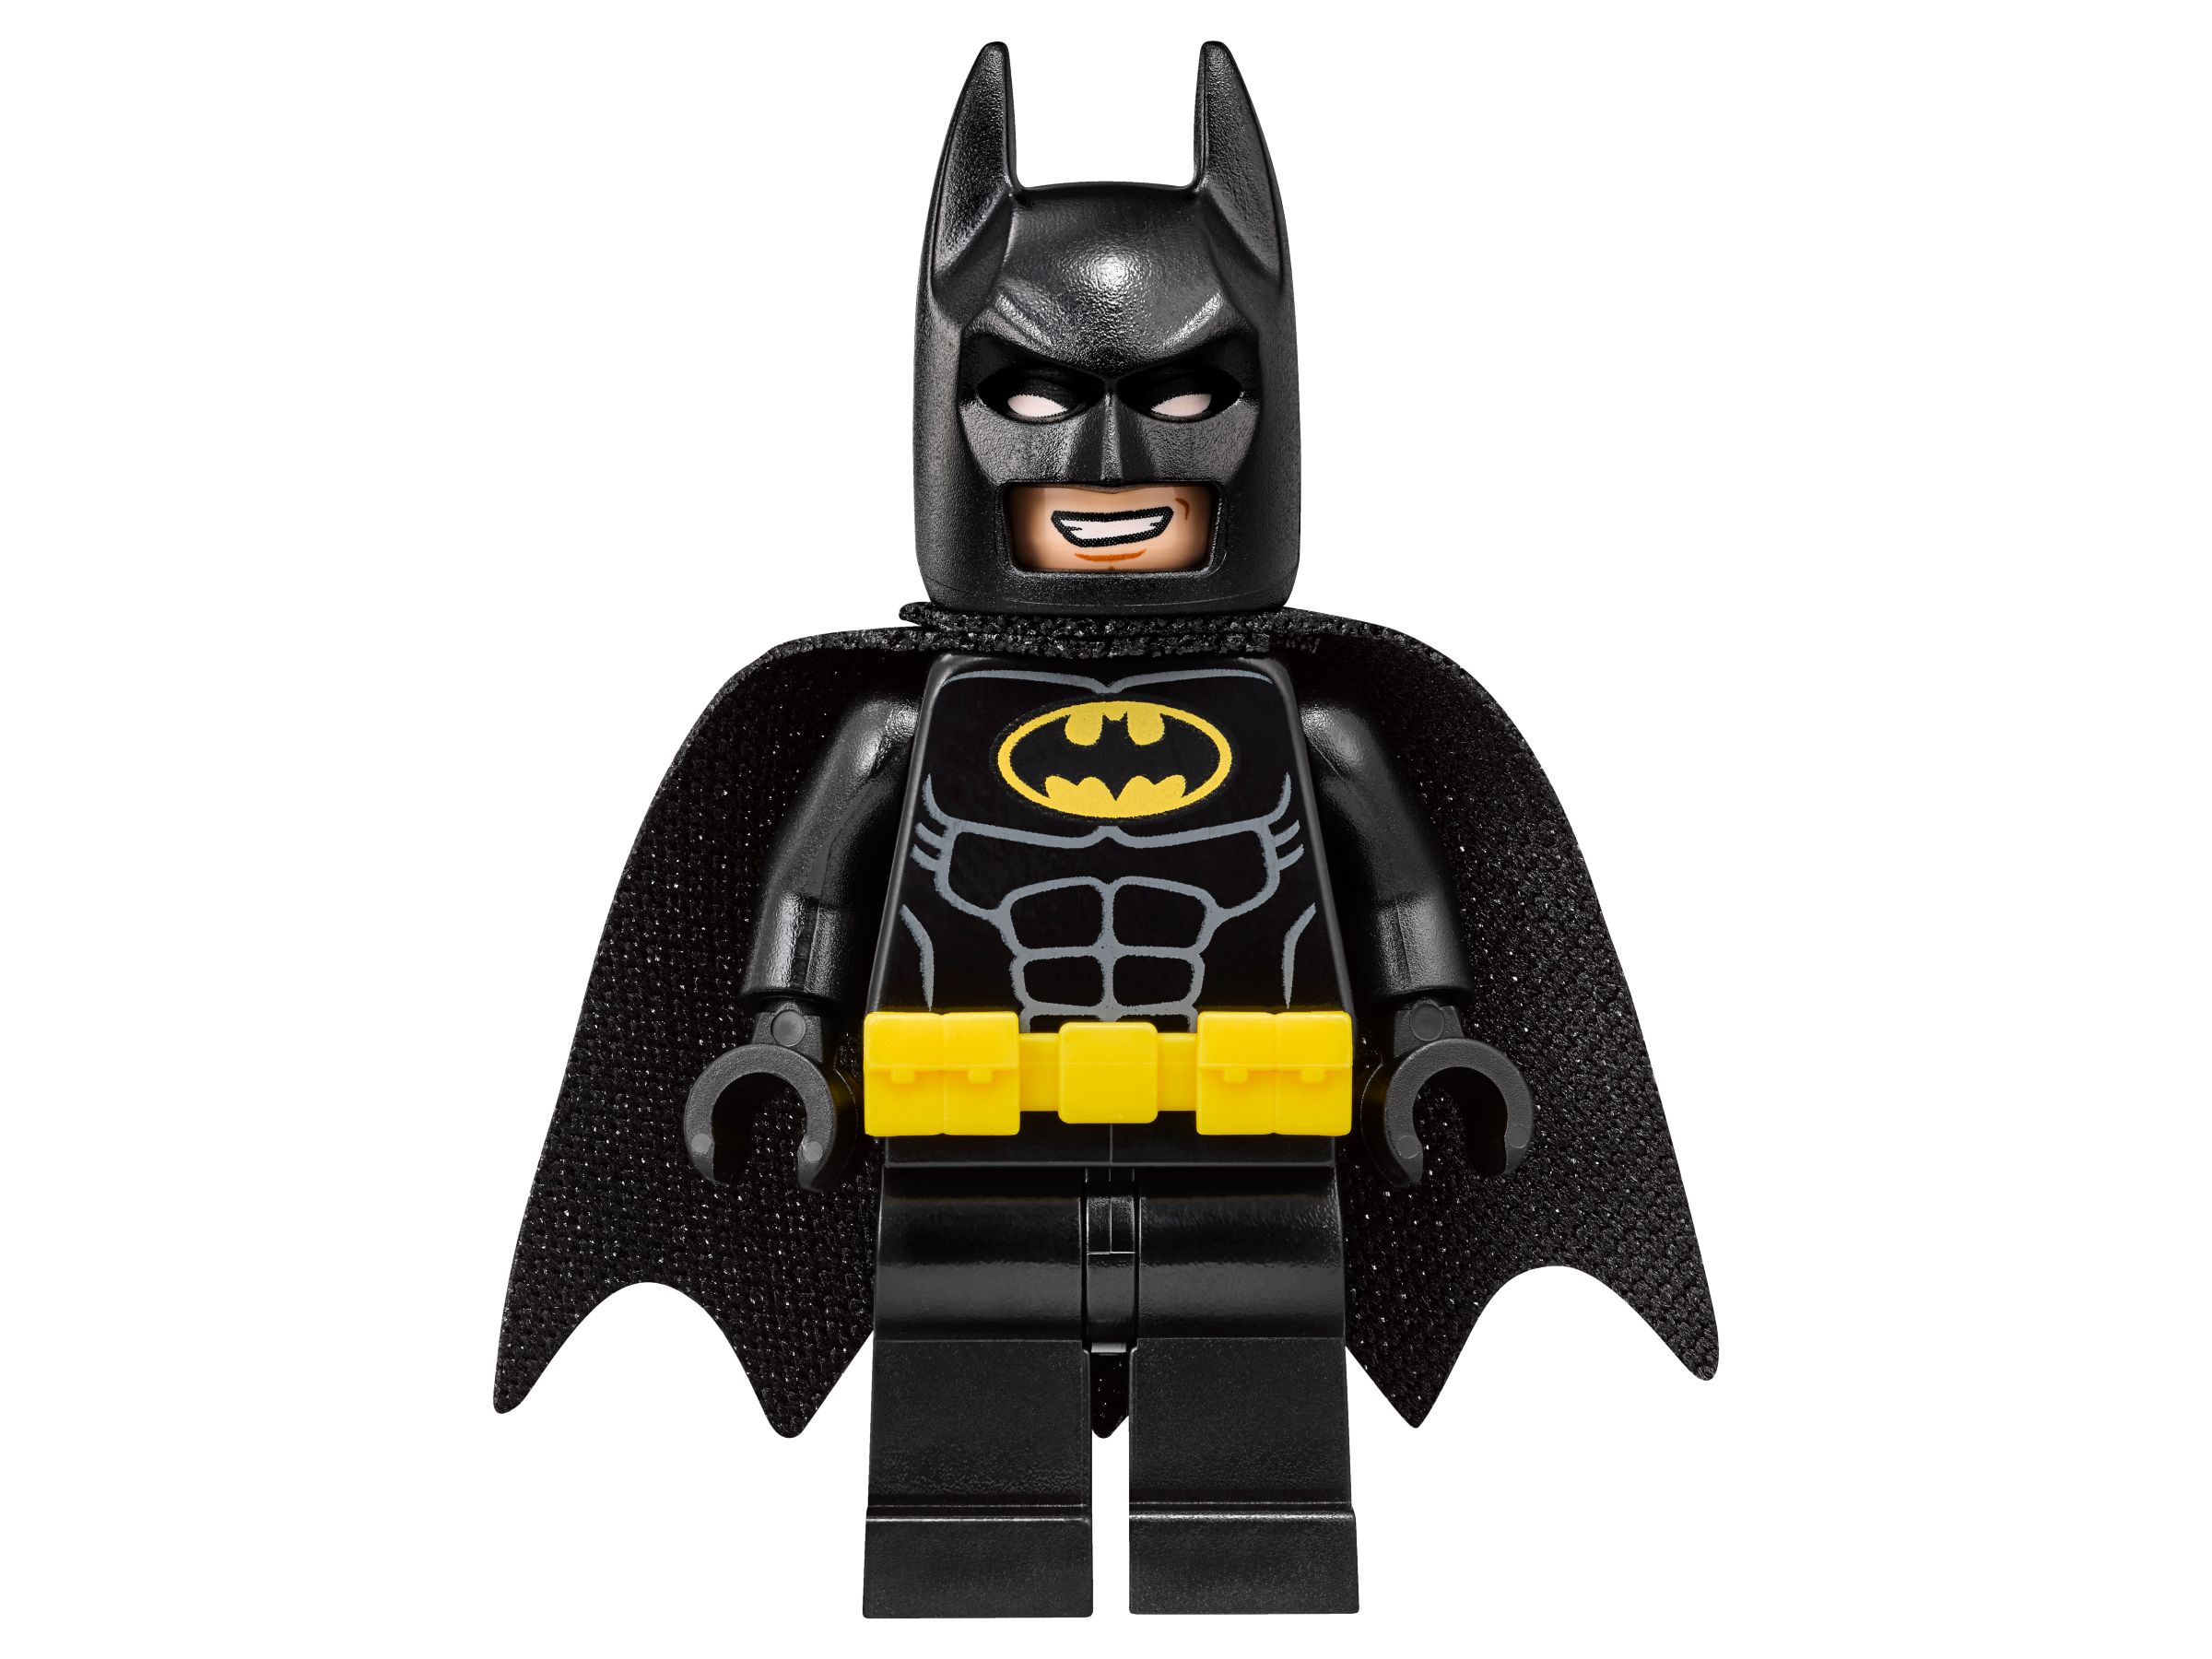 LEGO The LEGO Batman Movie 70917 Ultimatives Batmobil LEGO_70917_alt10.jpg